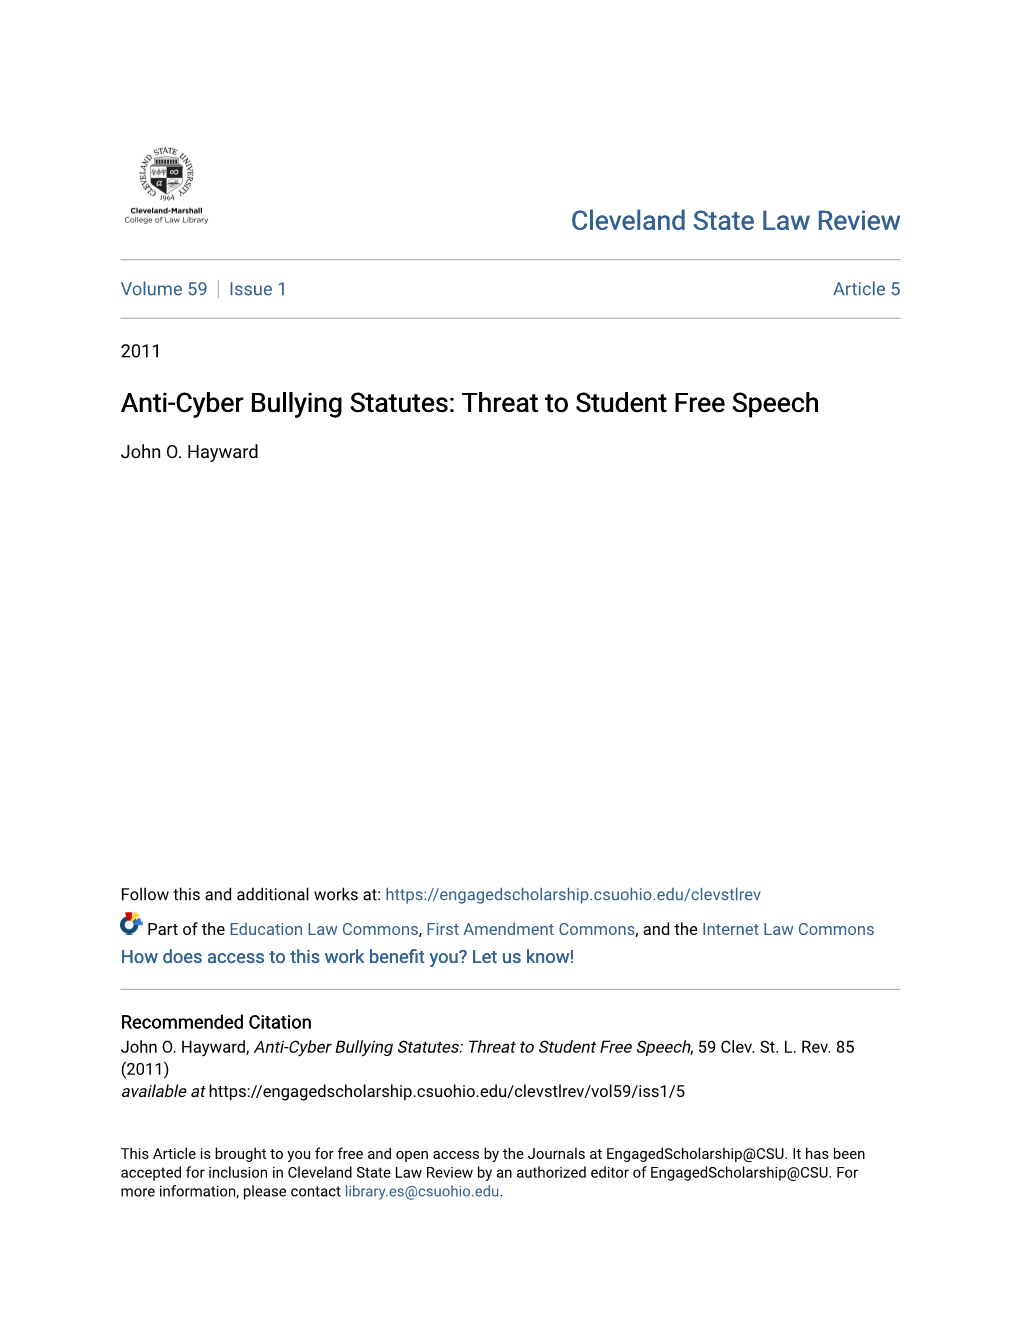 Anti-Cyber Bullying Statutes: Threat to Student Free Speech